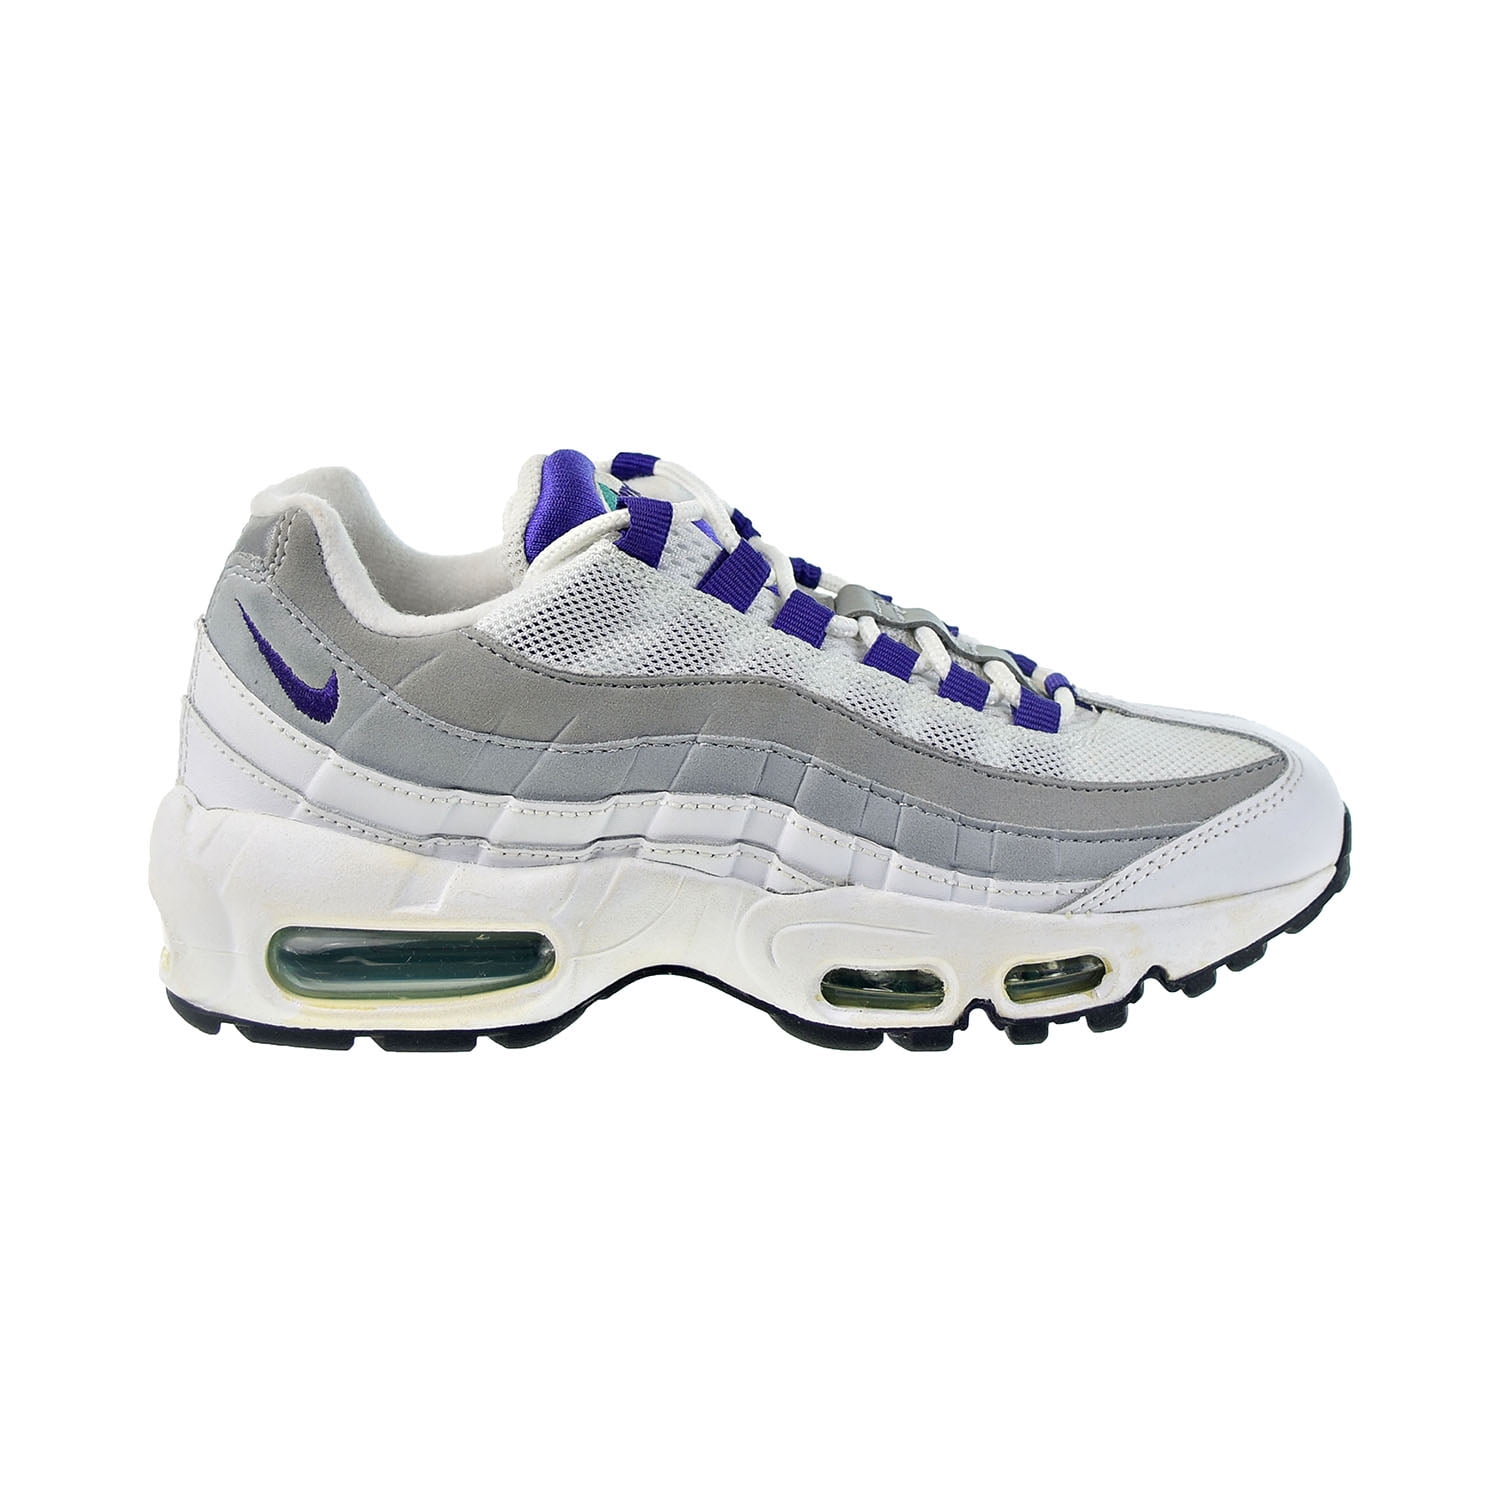 Andrew Halliday Cha mezcla Nike Air Max 95 "Grape" Women's Shoes White-Court Purple-Emerald Green  307960-101 - Walmart.com